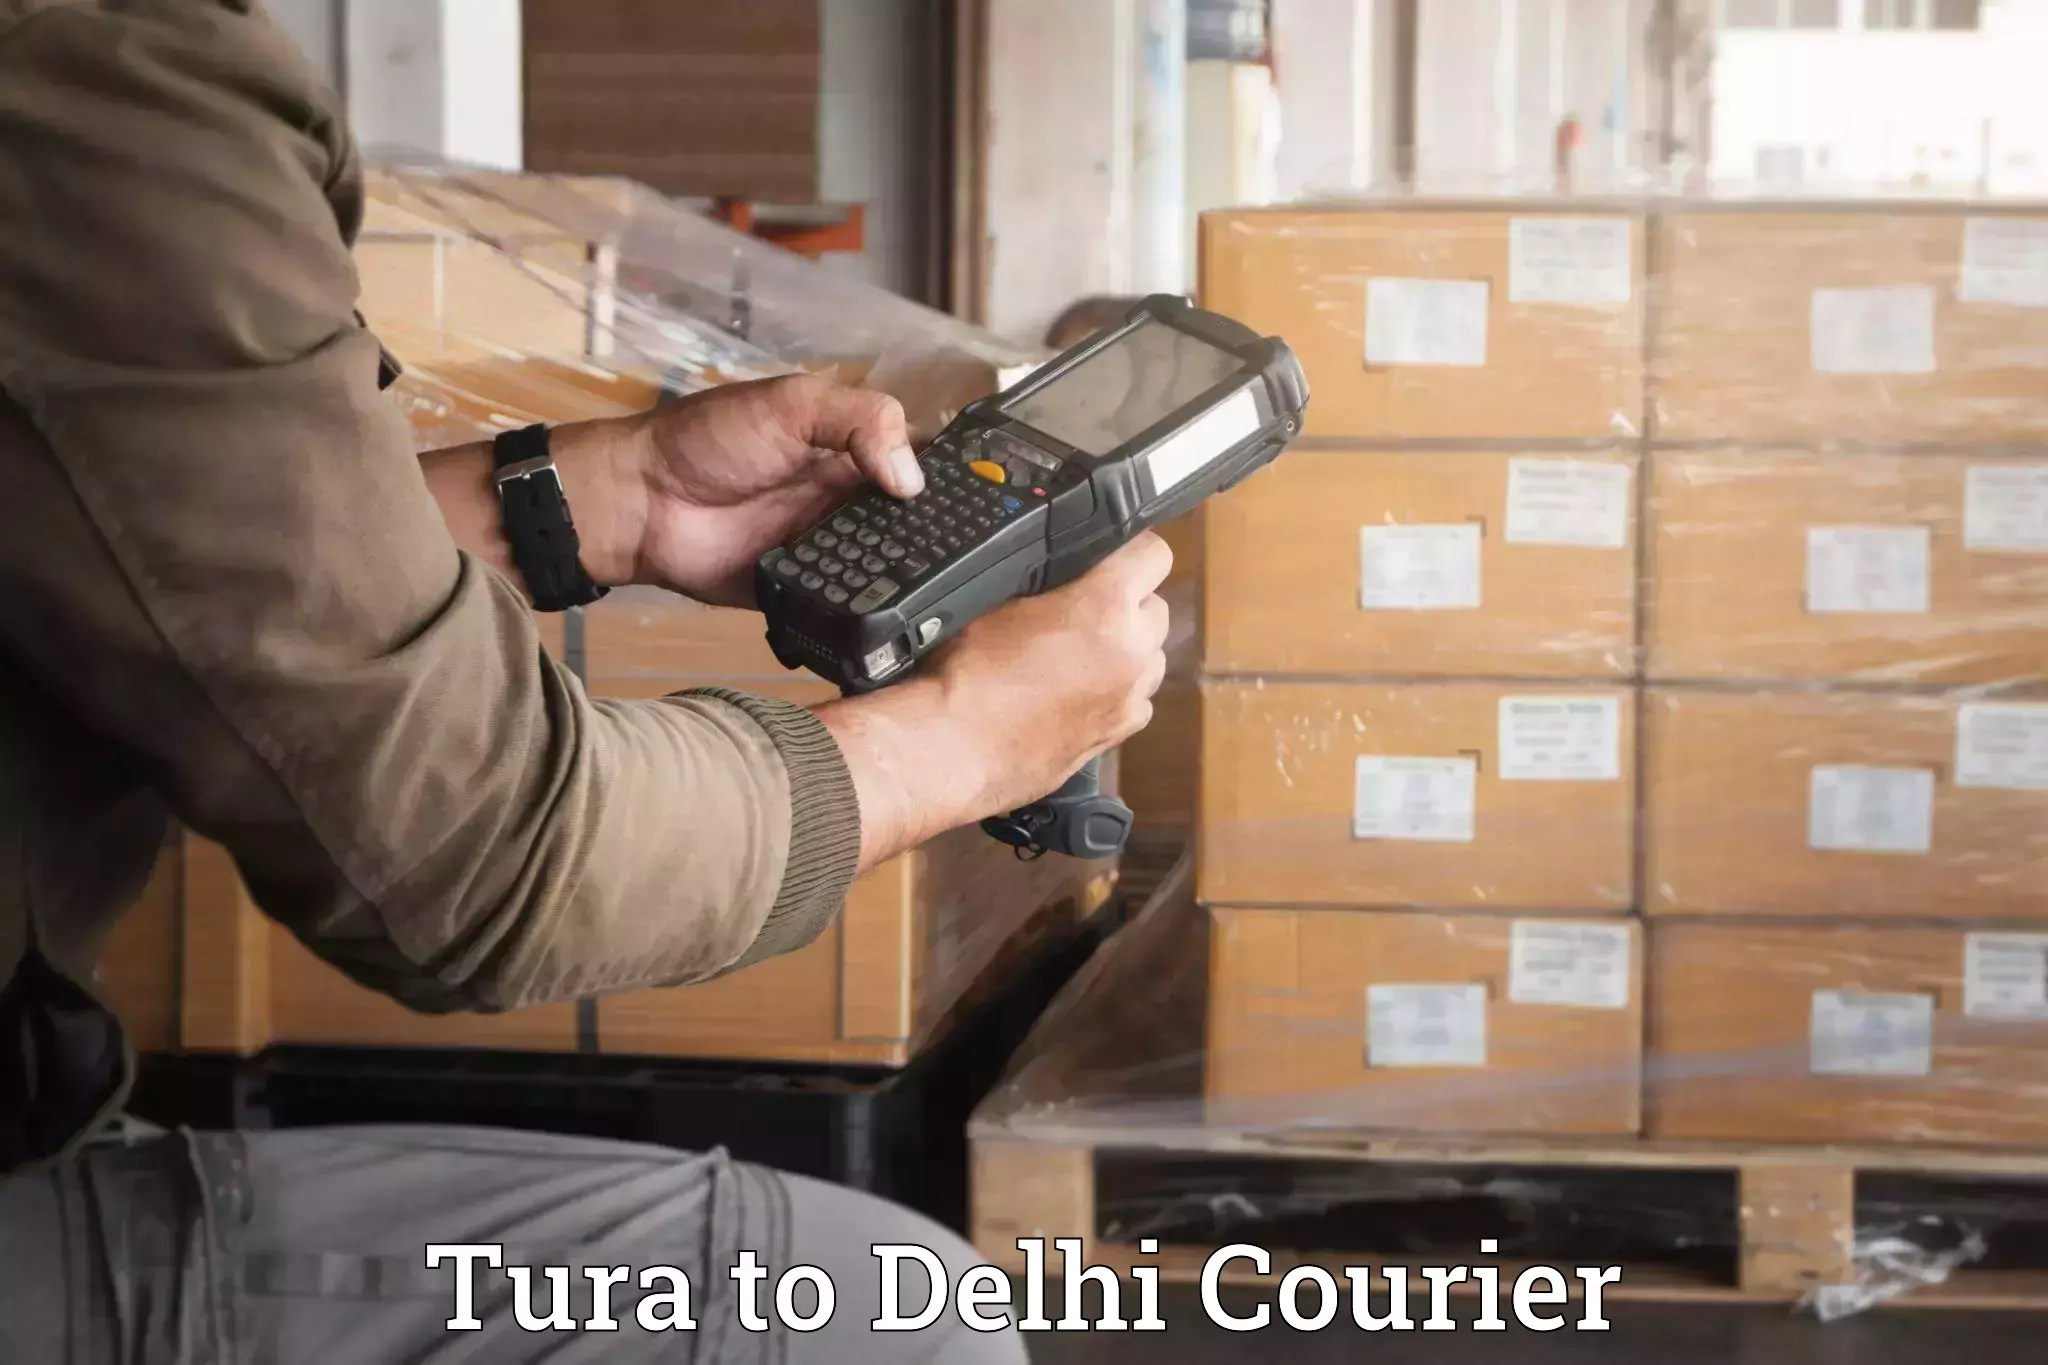 Professional moving company Tura to Delhi